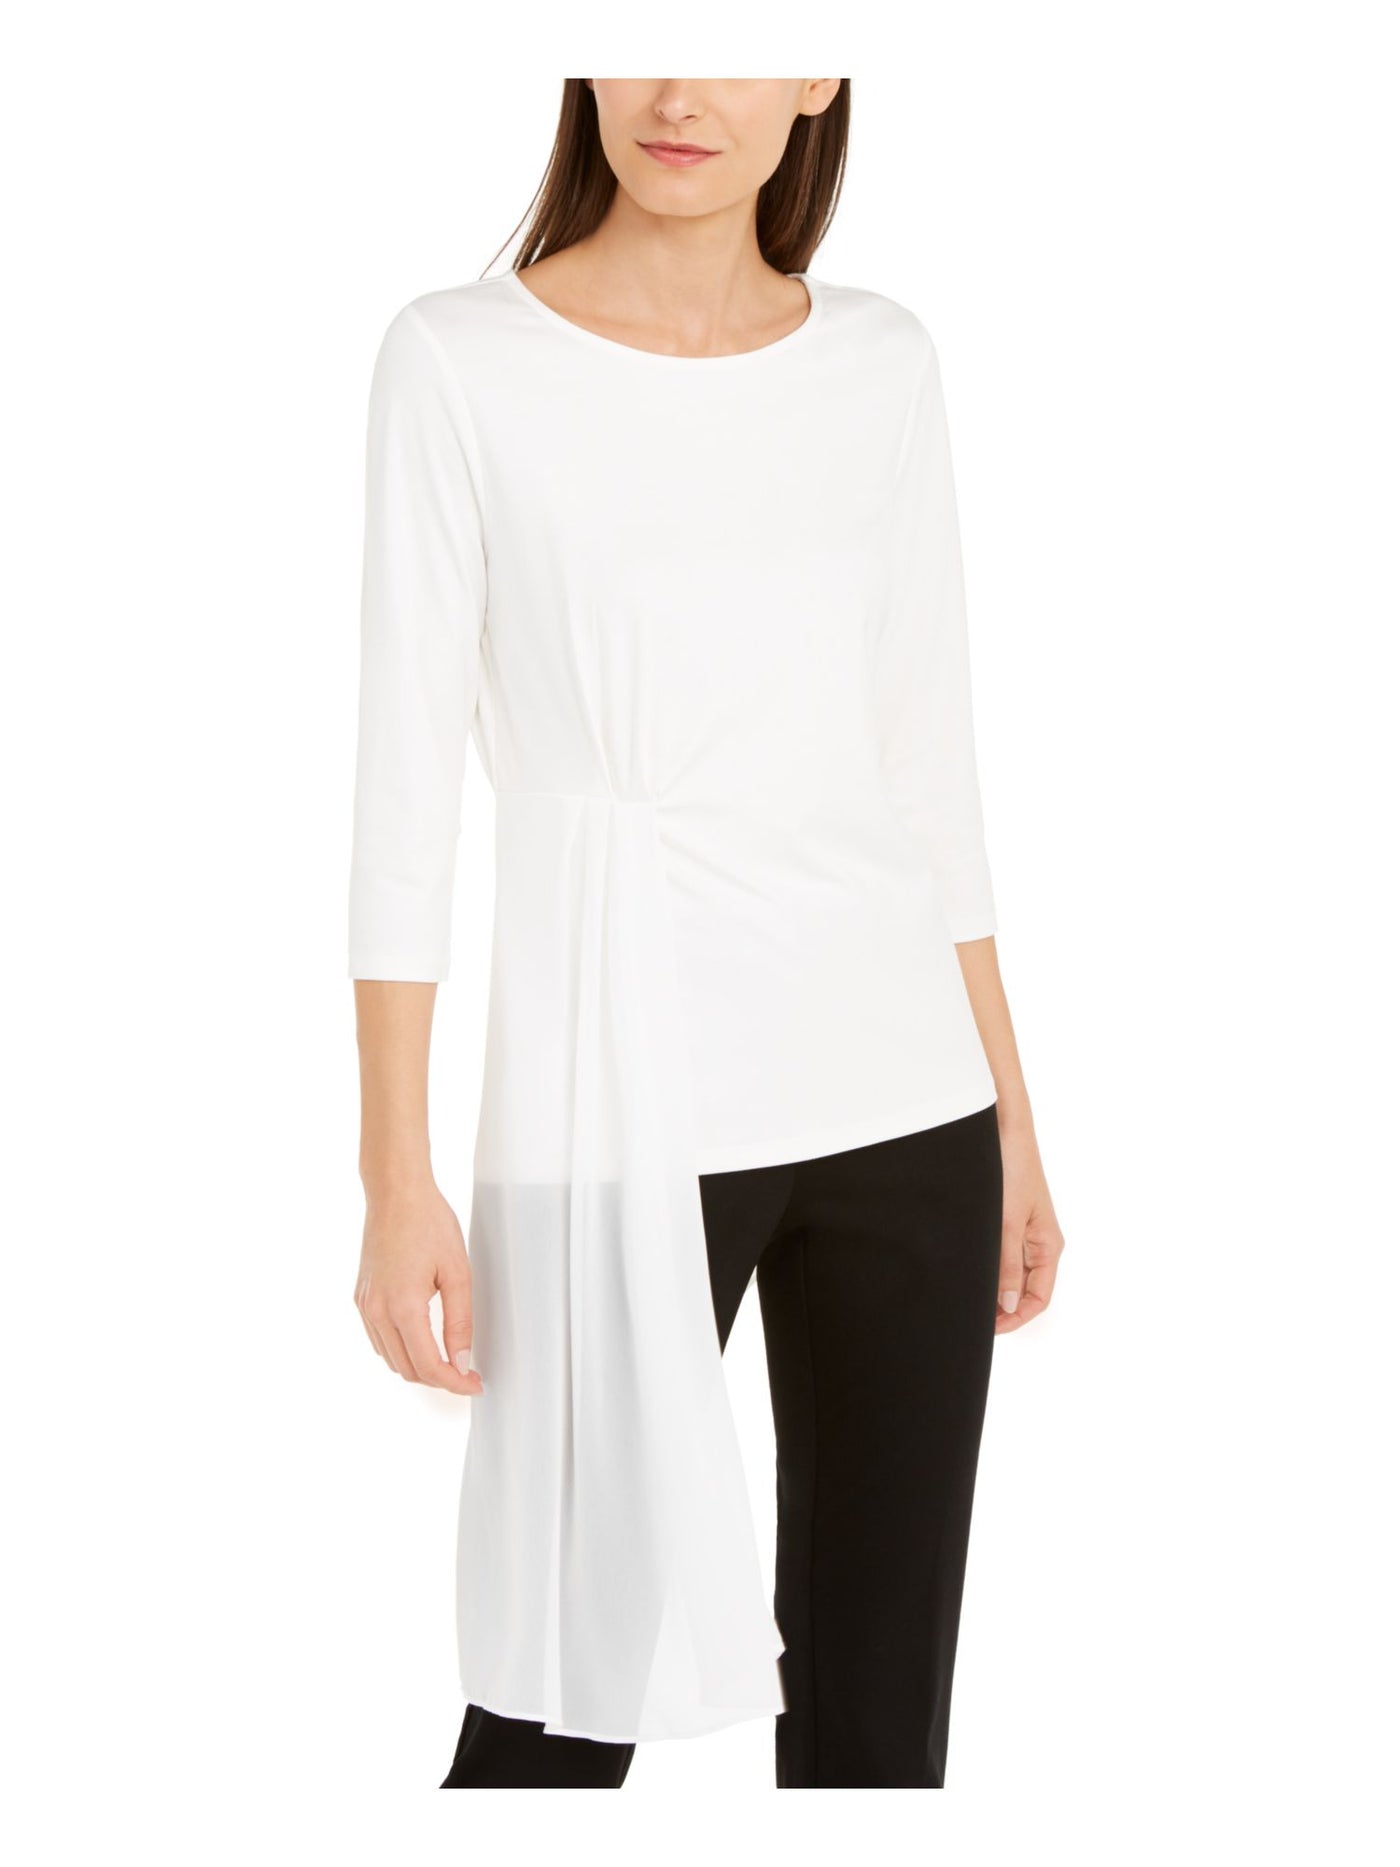 ALFANI Womens White 3/4 Sleeve Open Cardigan Sweater L